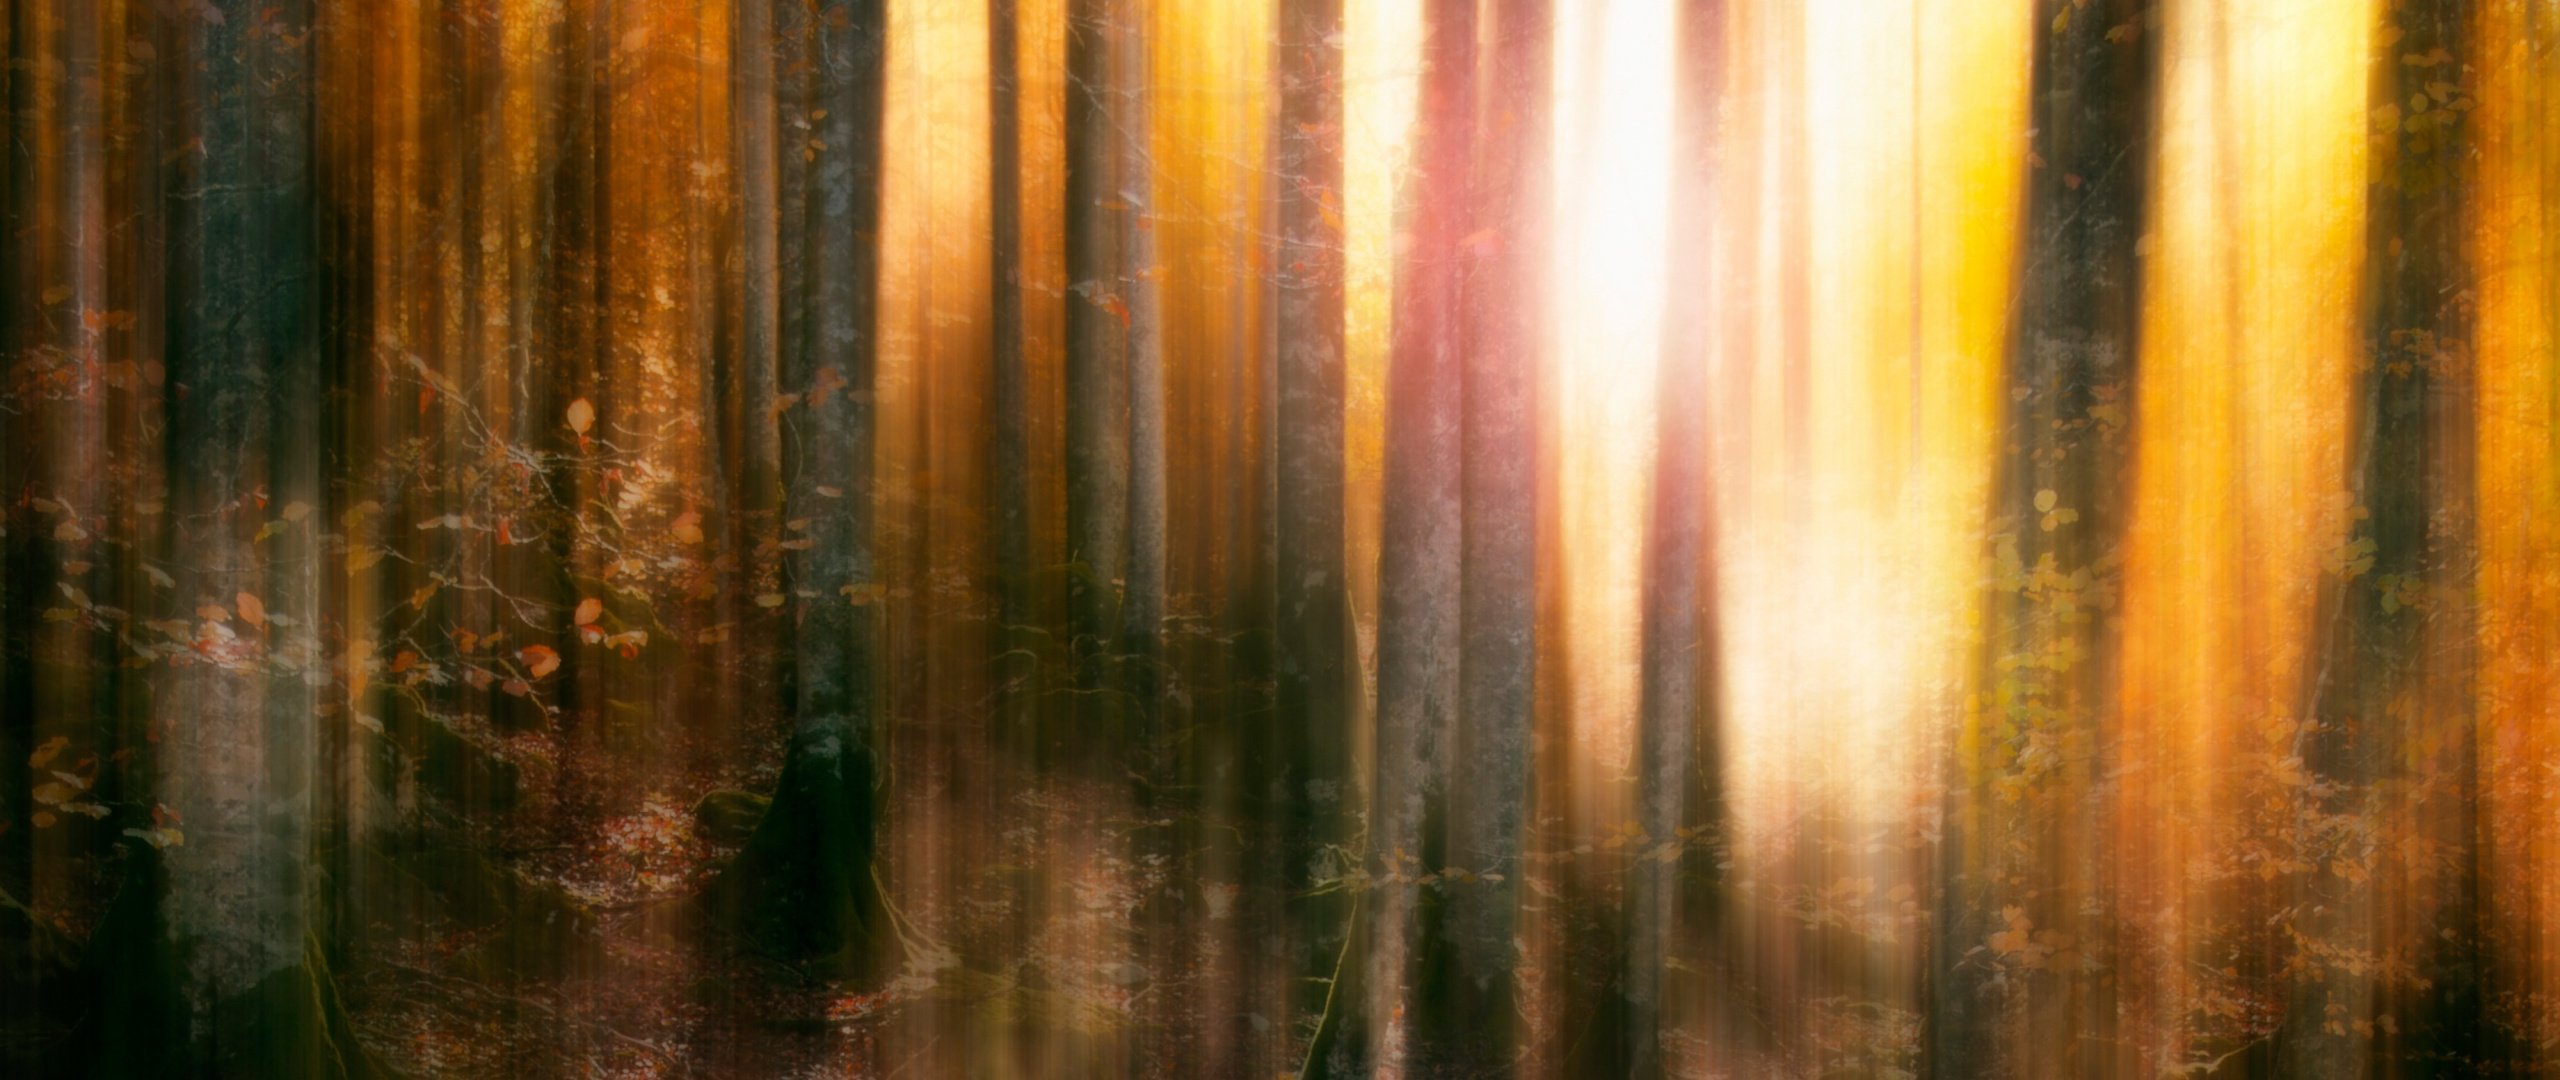 Download Autumn, blur, forest, trees wallpaper, 2560x1080, Dual Wide, Widescreen